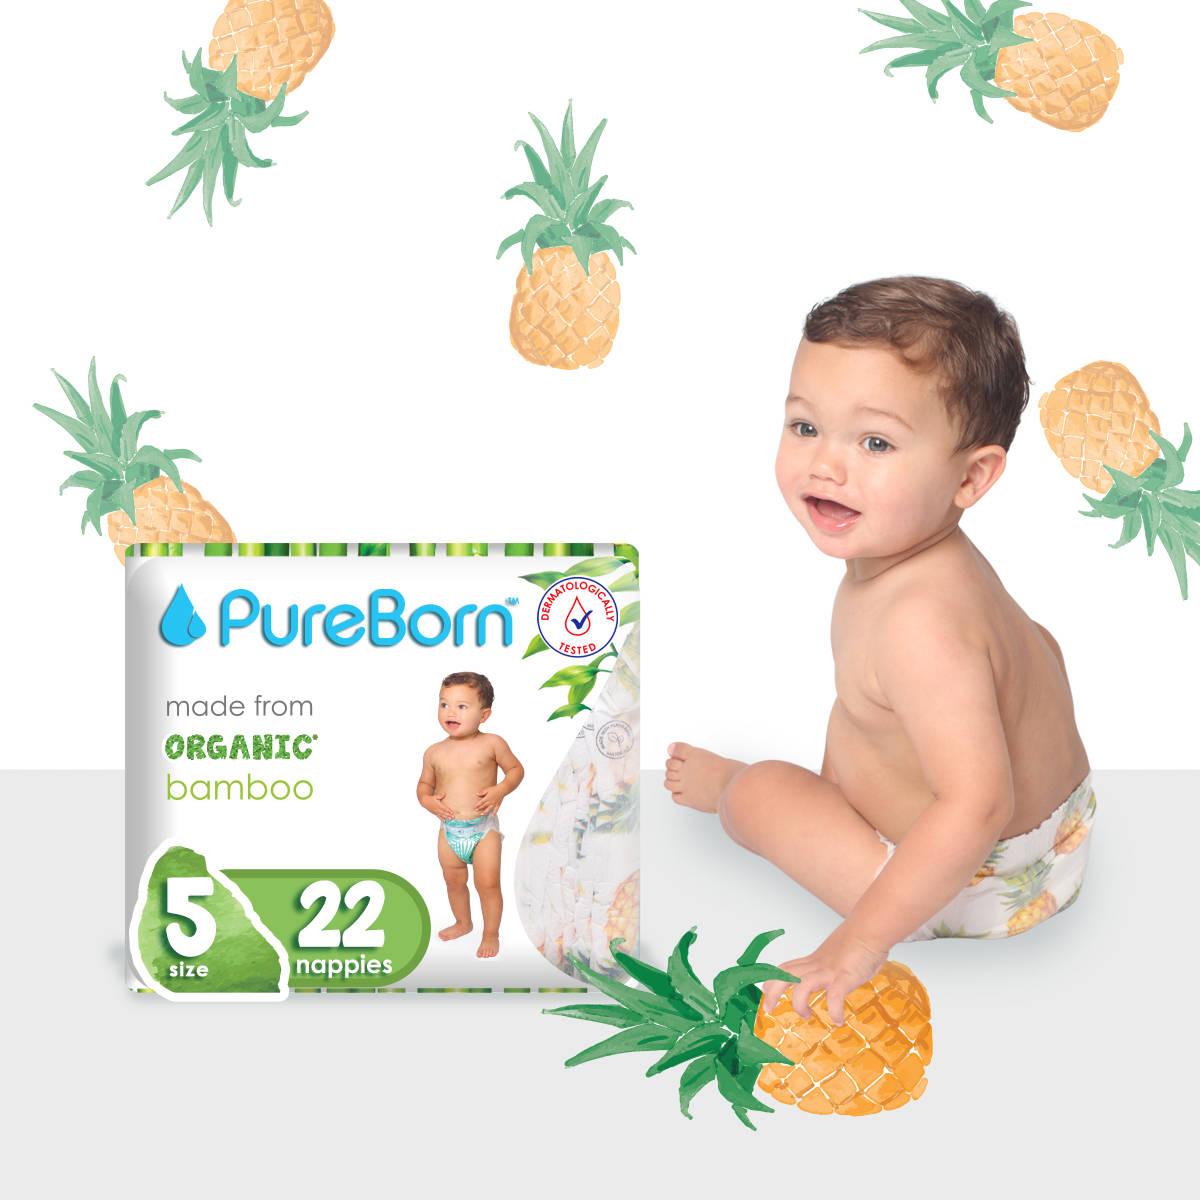 PureBorn Organic Baby Care29958